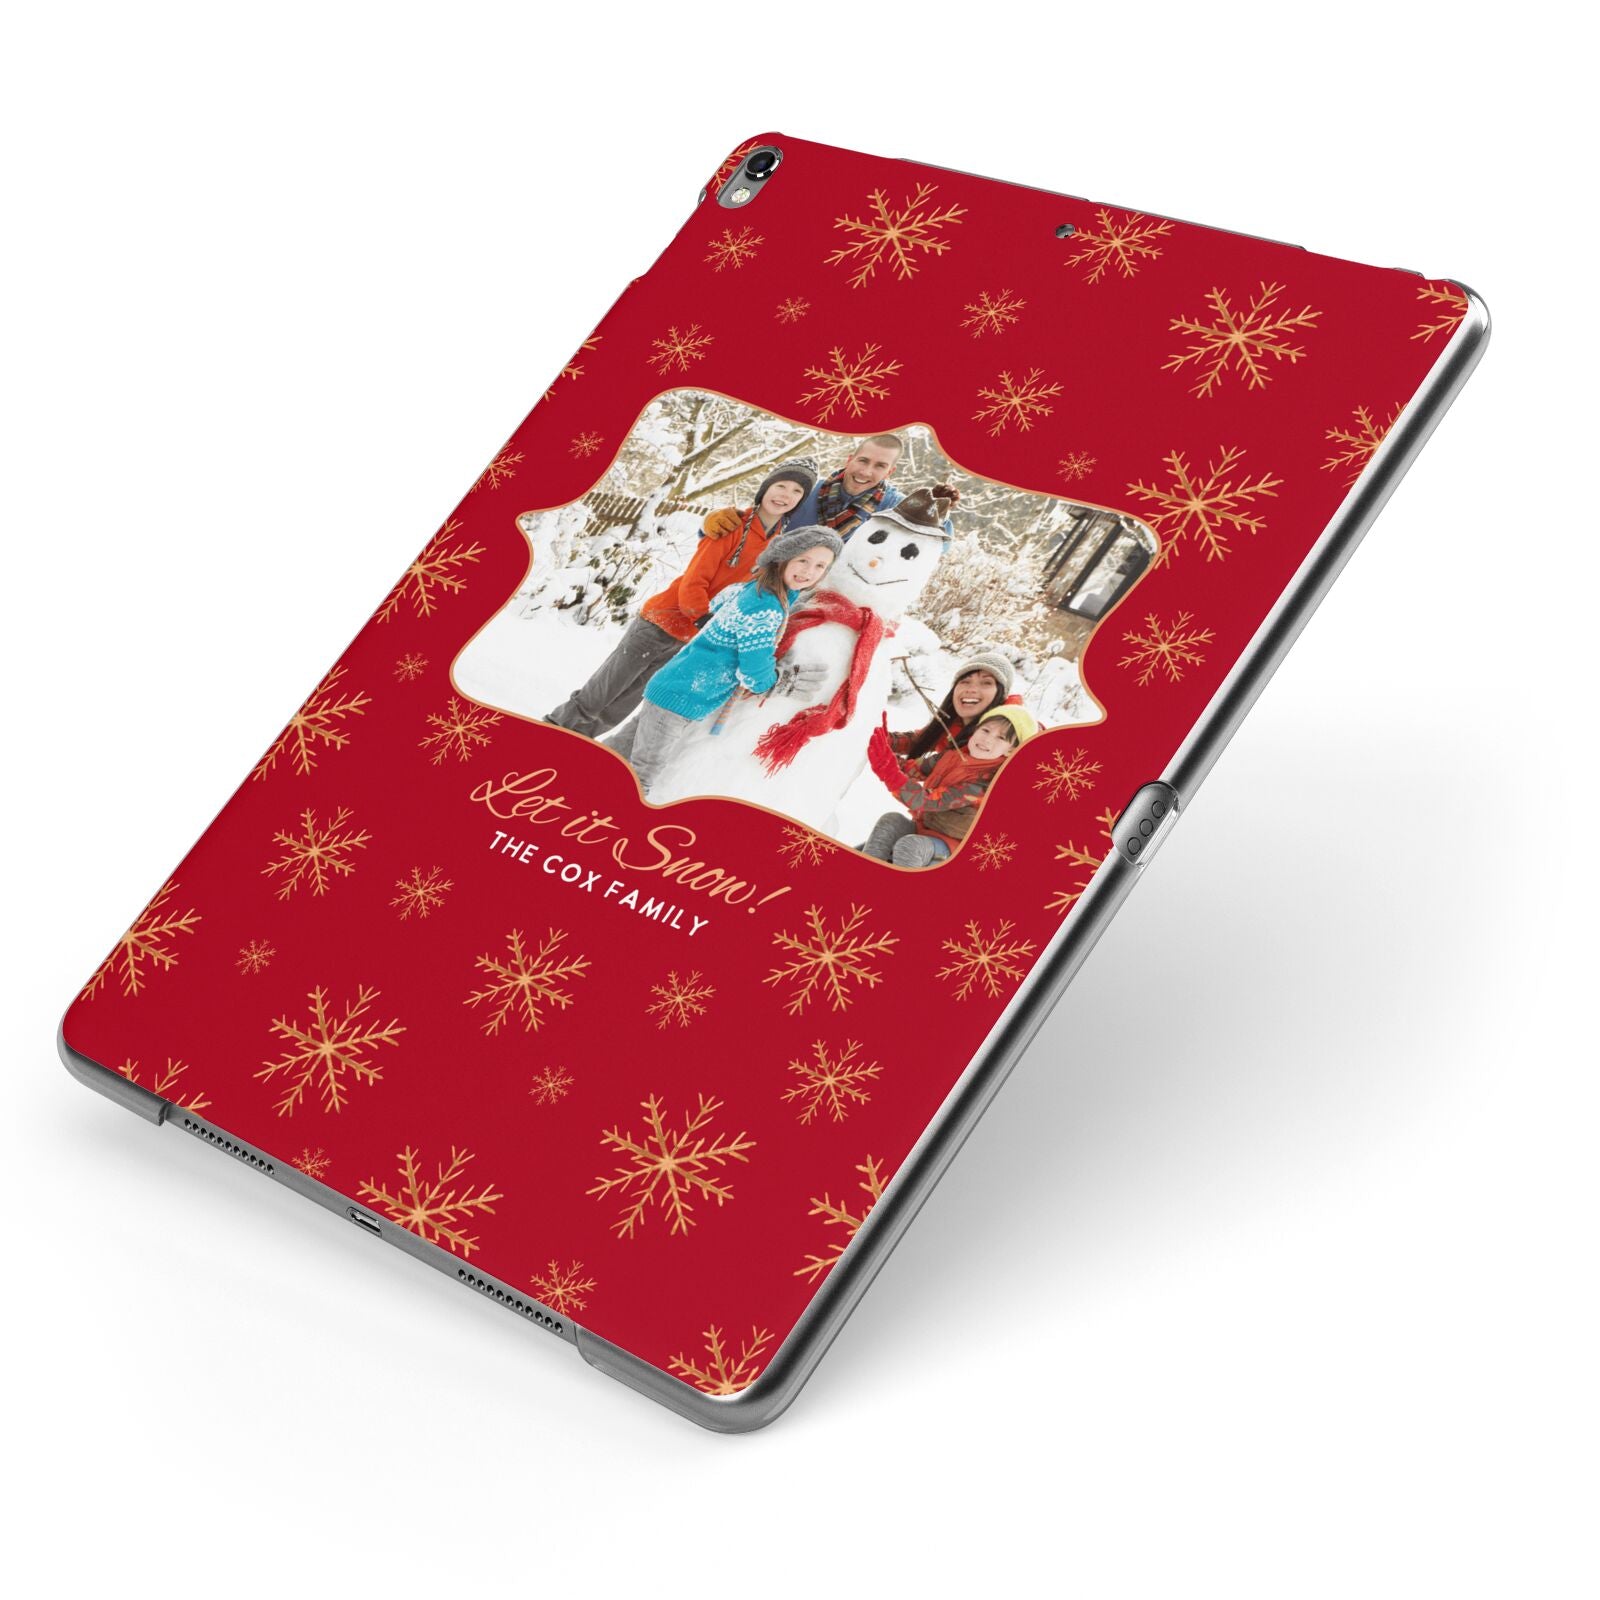 Let it Snow Christmas Photo Upload Apple iPad Case on Grey iPad Side View